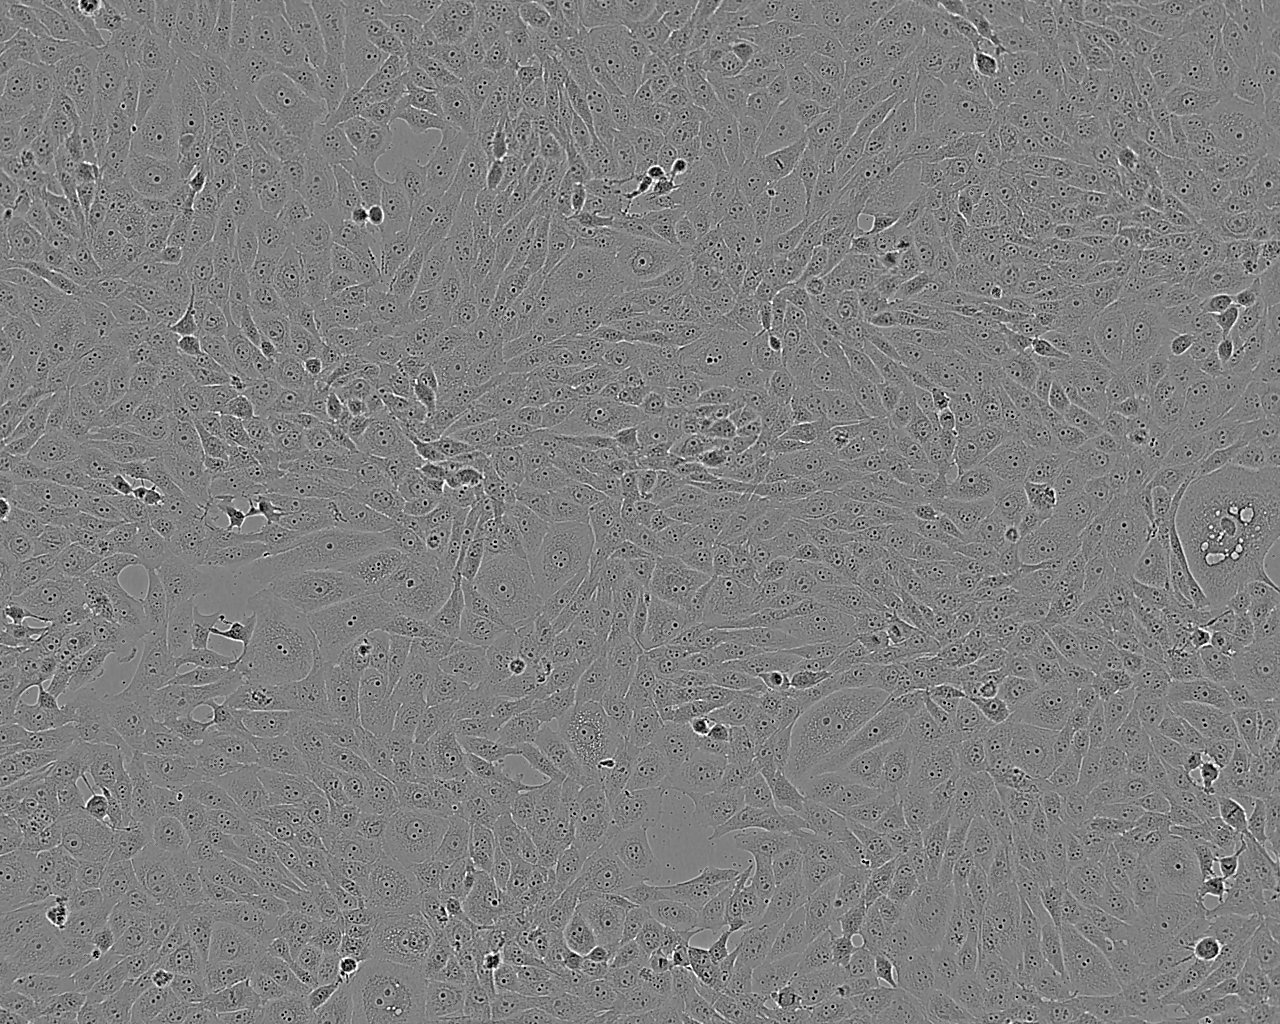 SNU-601 cell line人胃癌细胞系